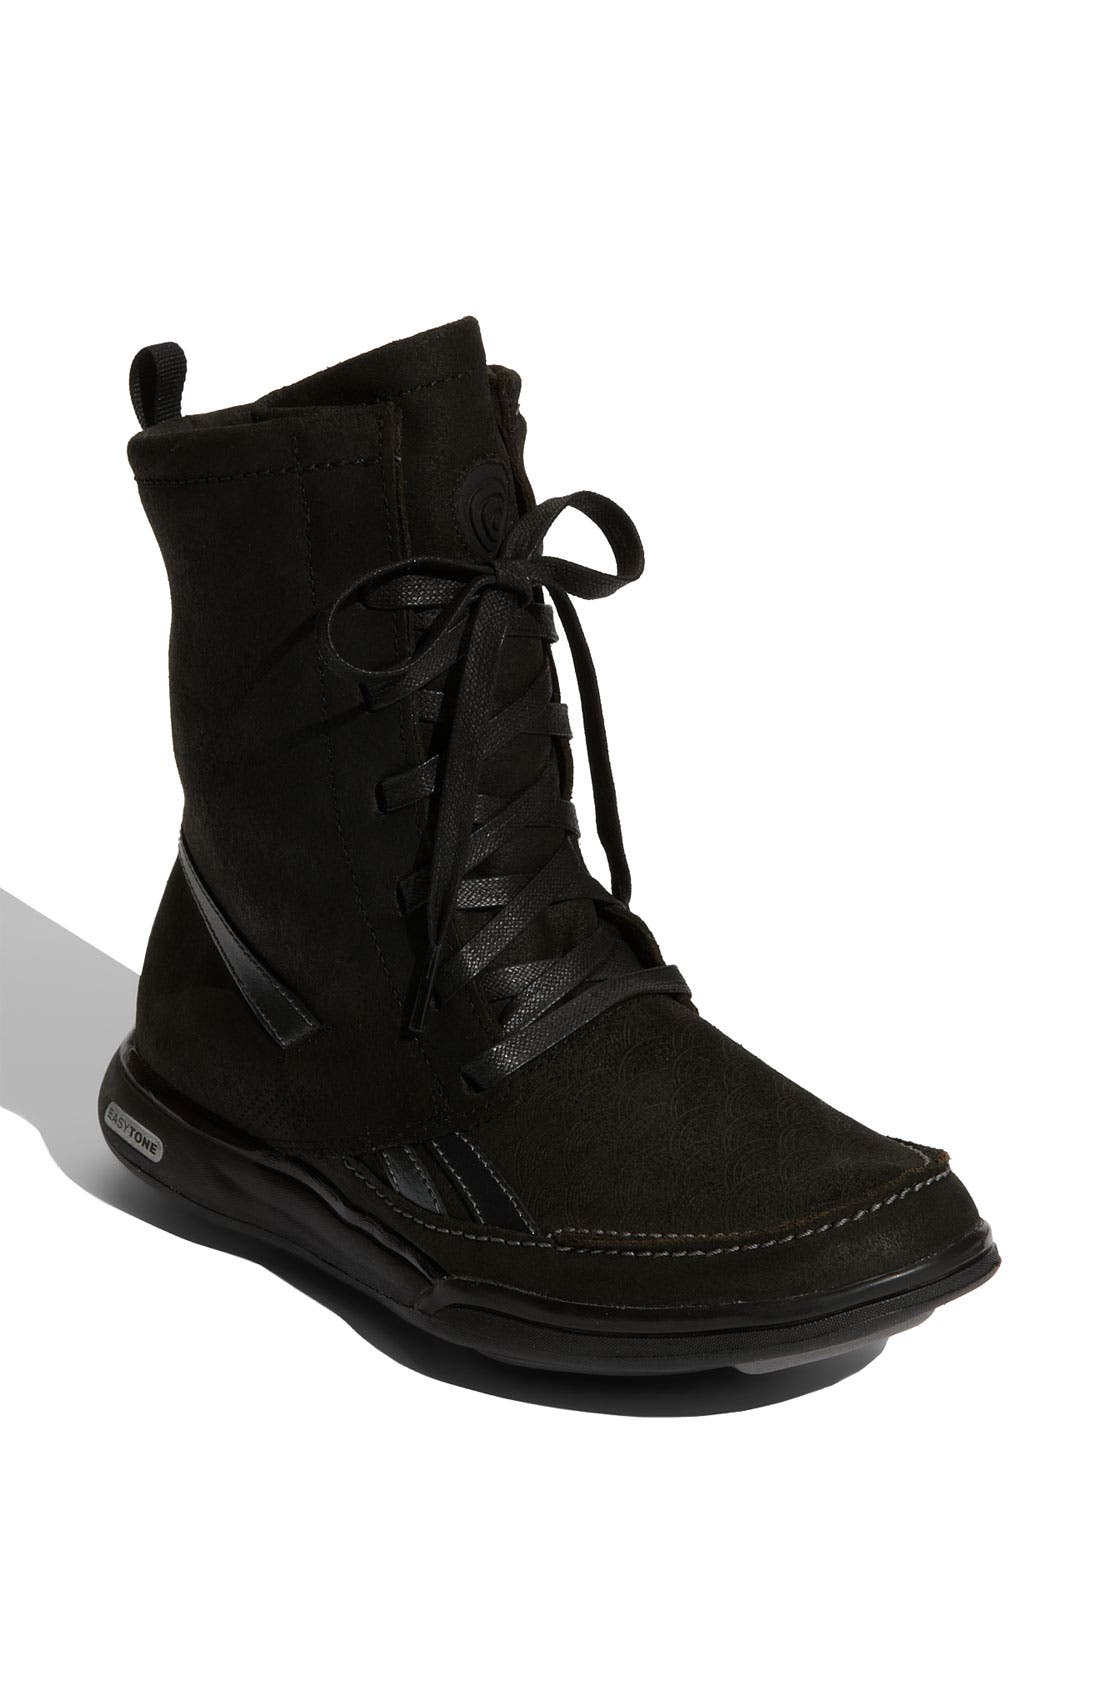 reebok easytone thinsulate boots